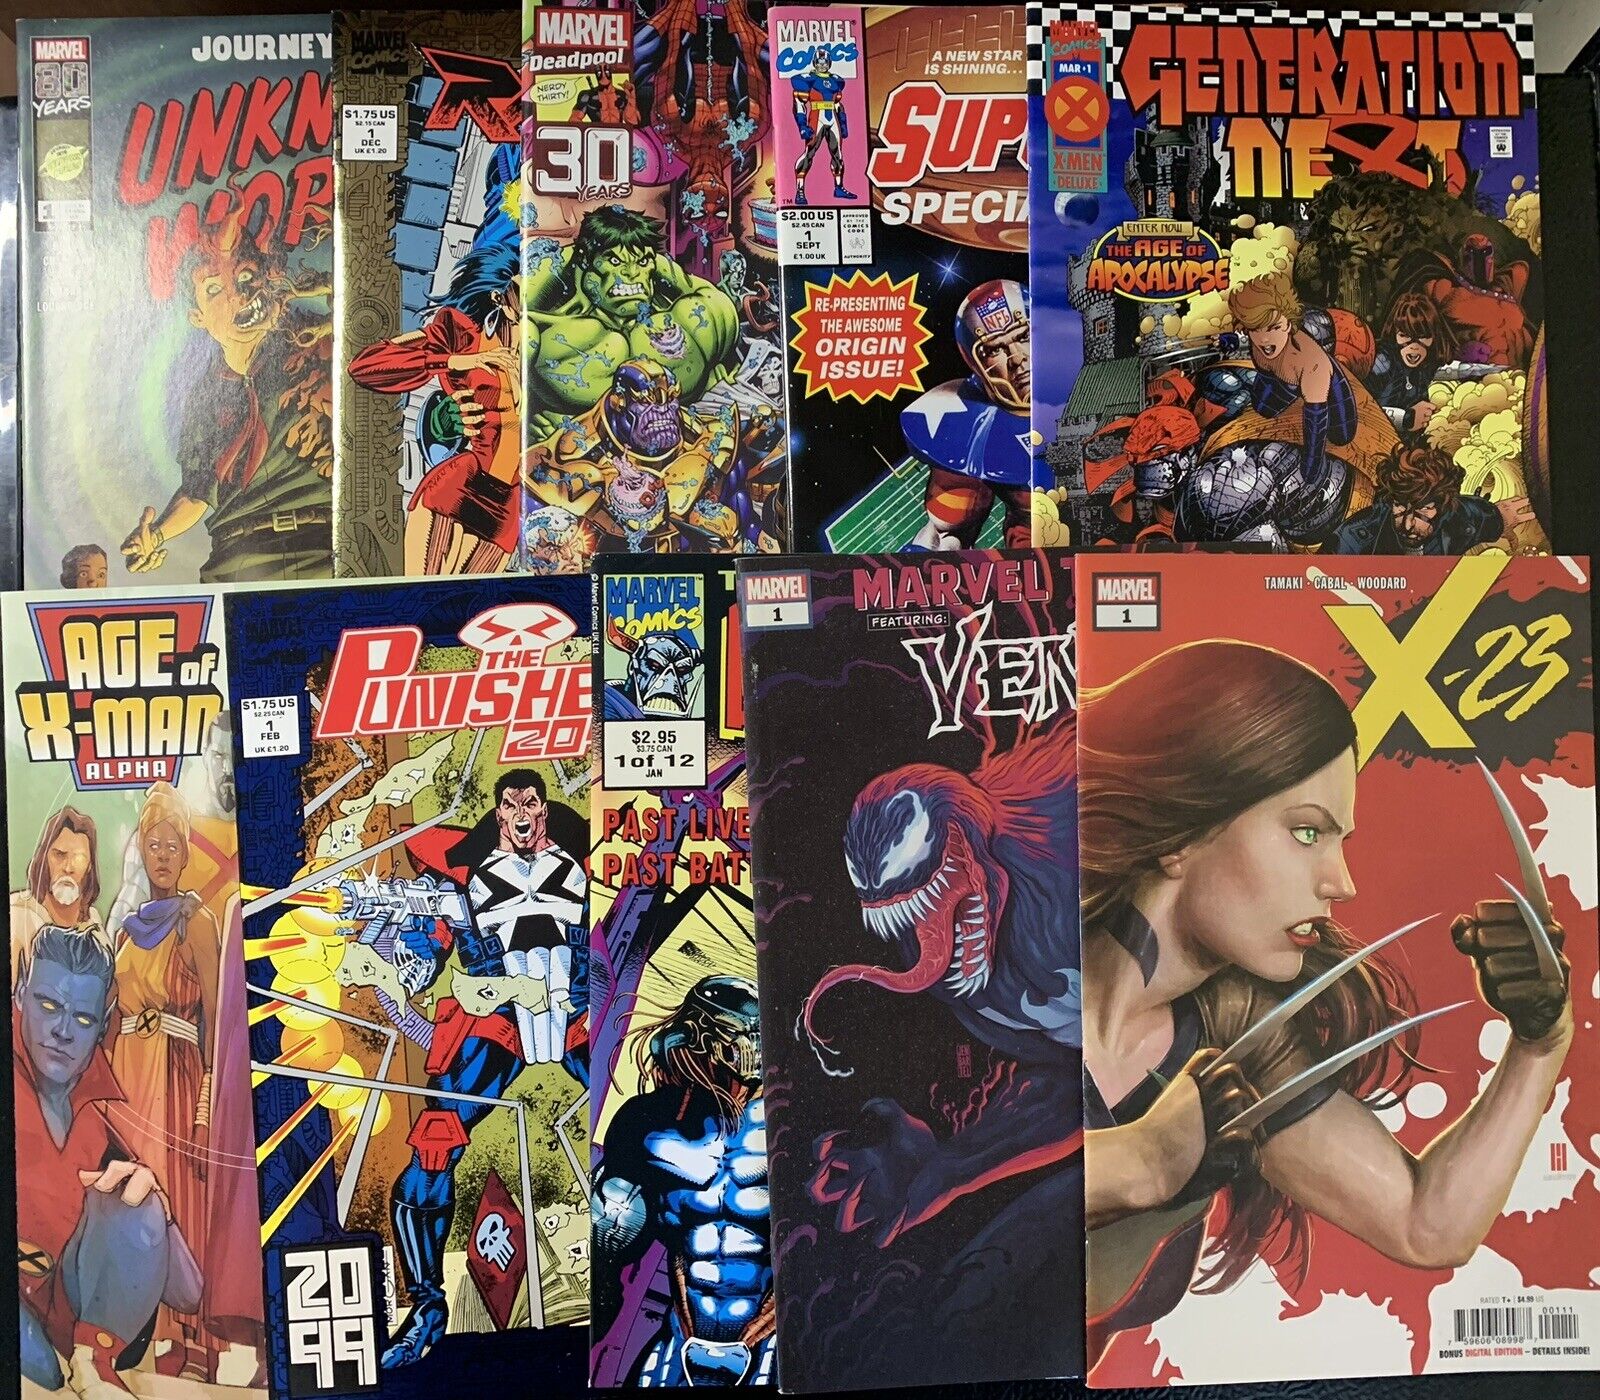 Marvel #1s Comic Lot (10 Books) Deadpool Venom X-23 X-Men